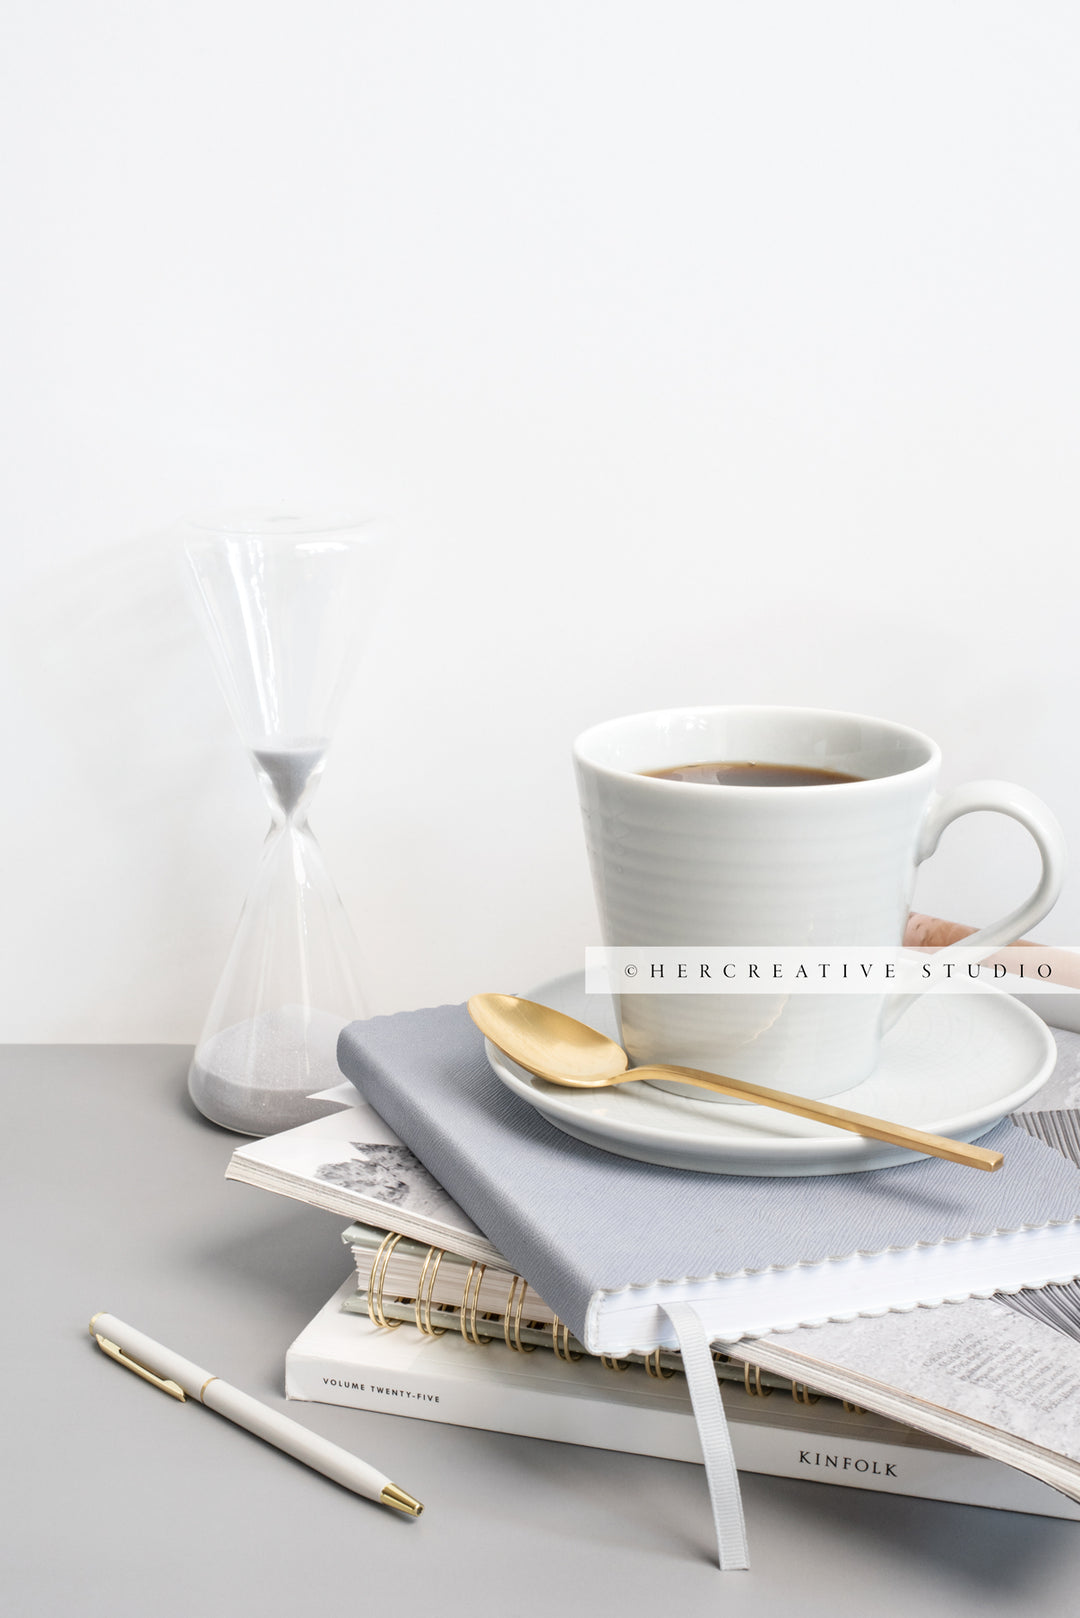 Coffee and Hourglass. Stock Image